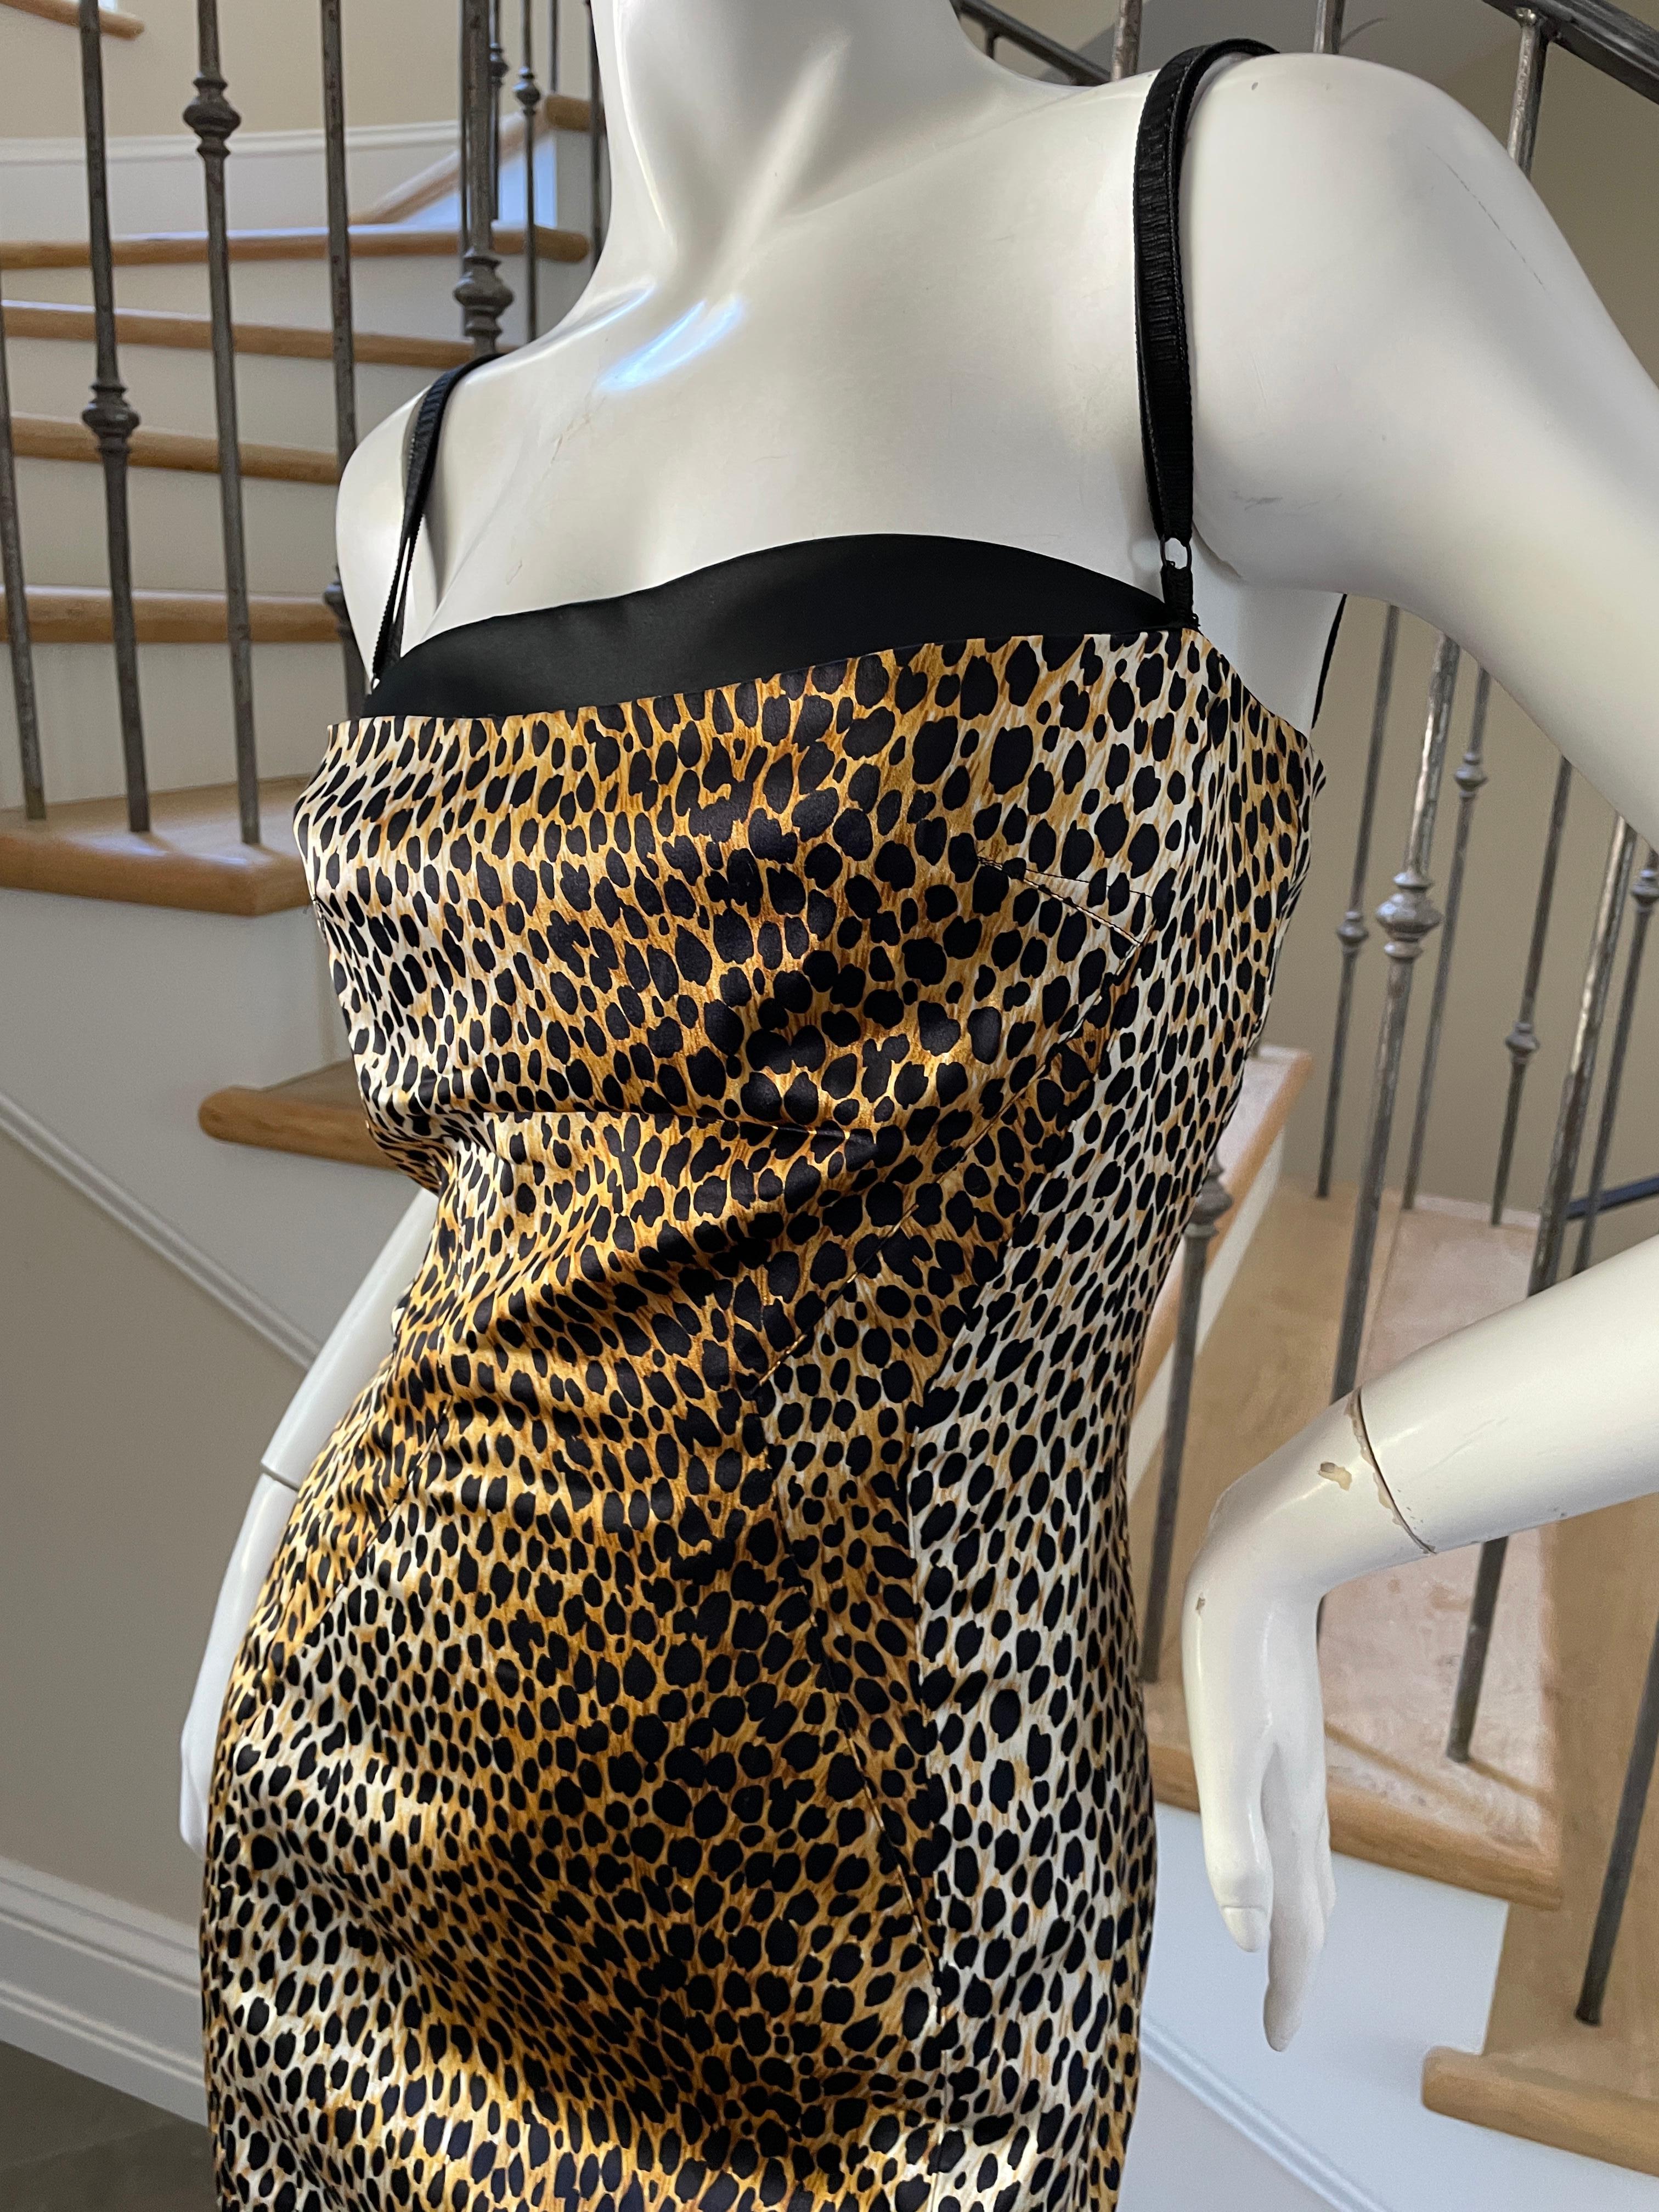 D&G by Dolce & Gabbana Vintage Silk Leopard Print Cocktail Dress
Size 38
 Bust 34